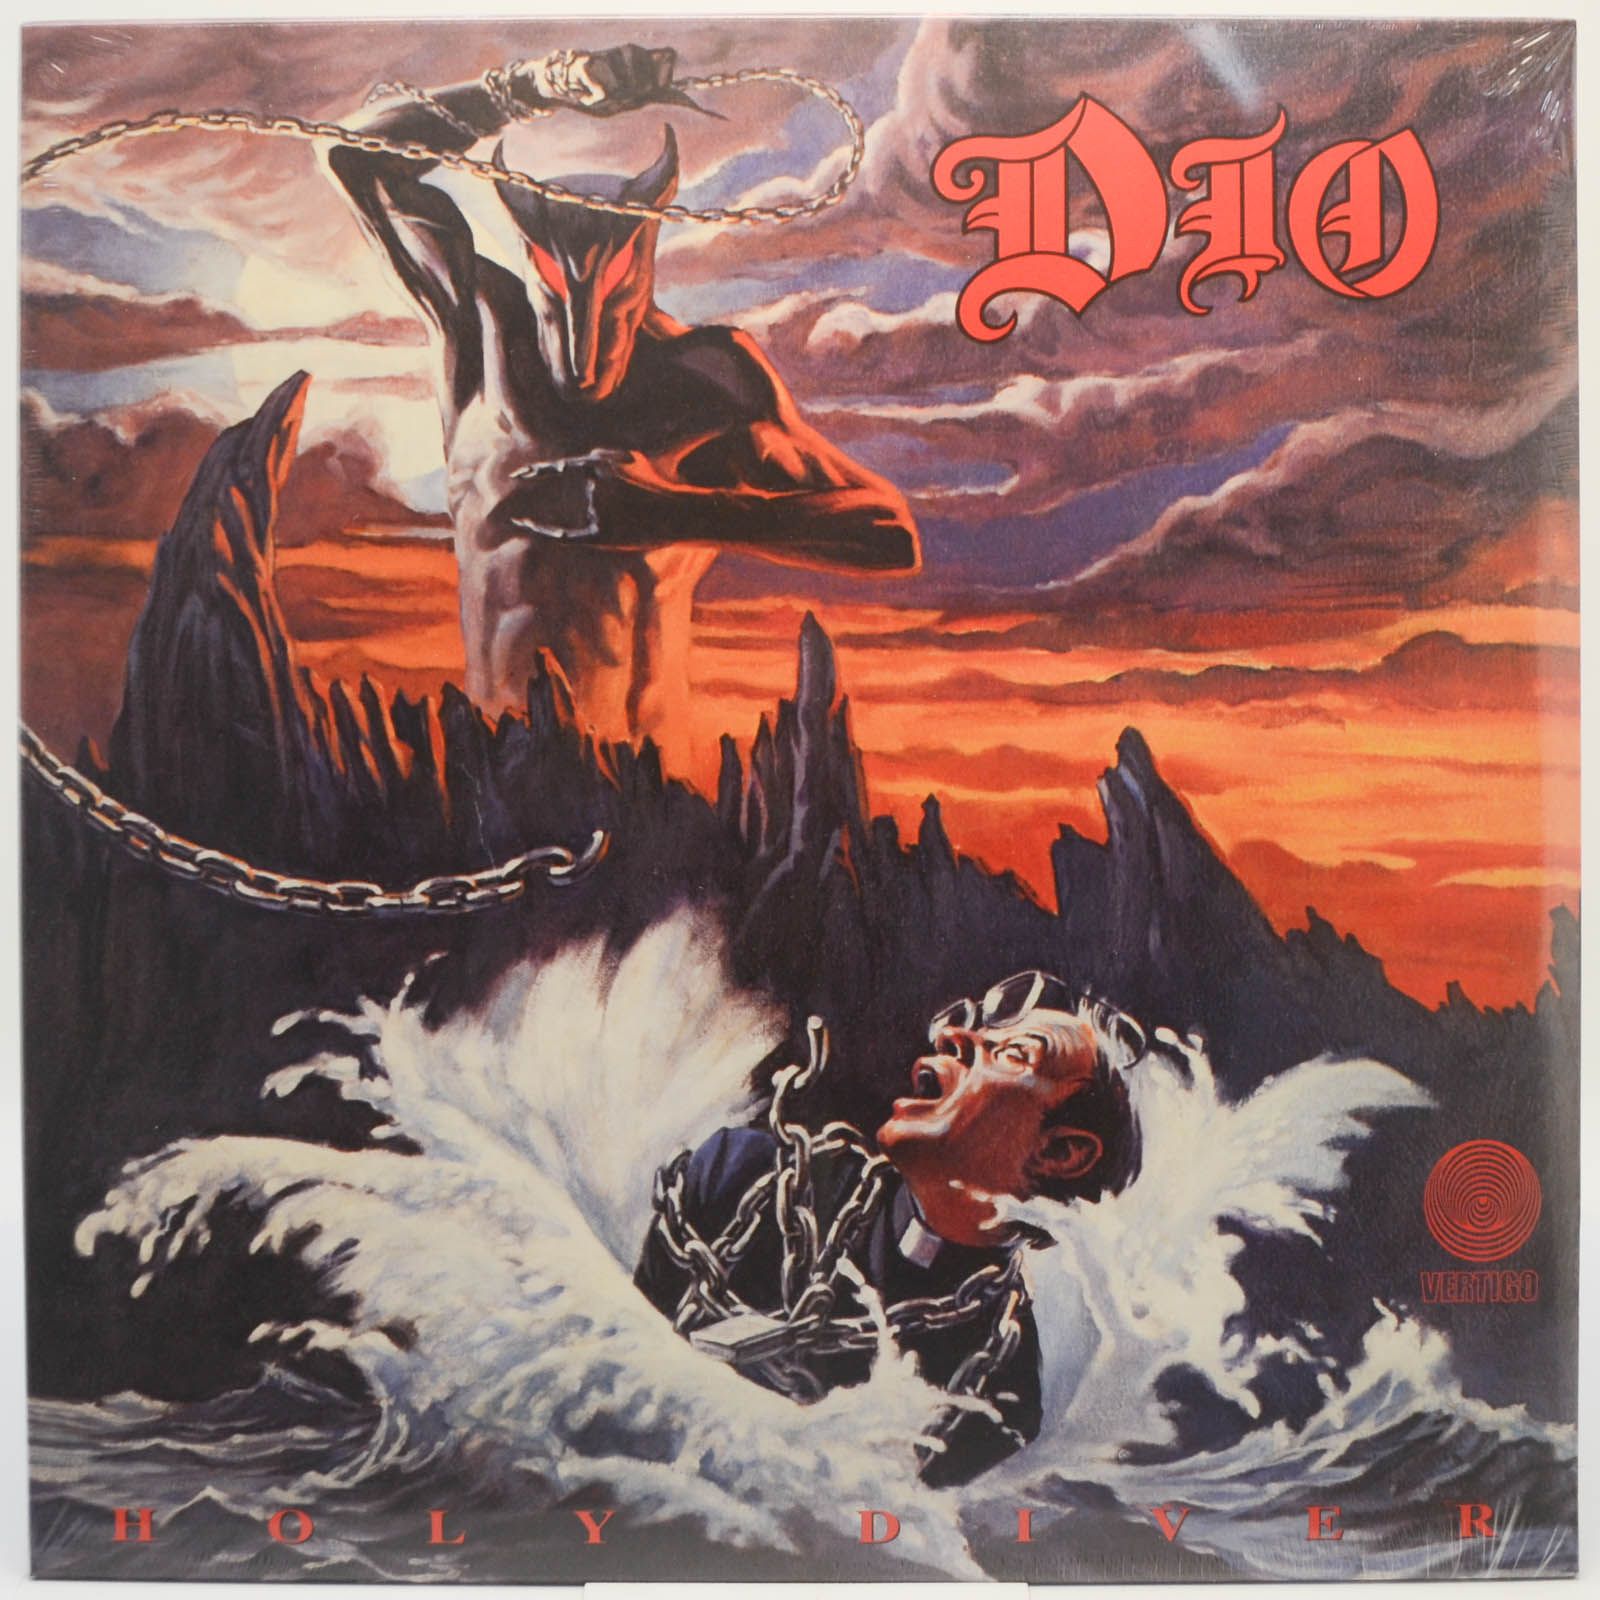 Dio — Holy Diver, 1983